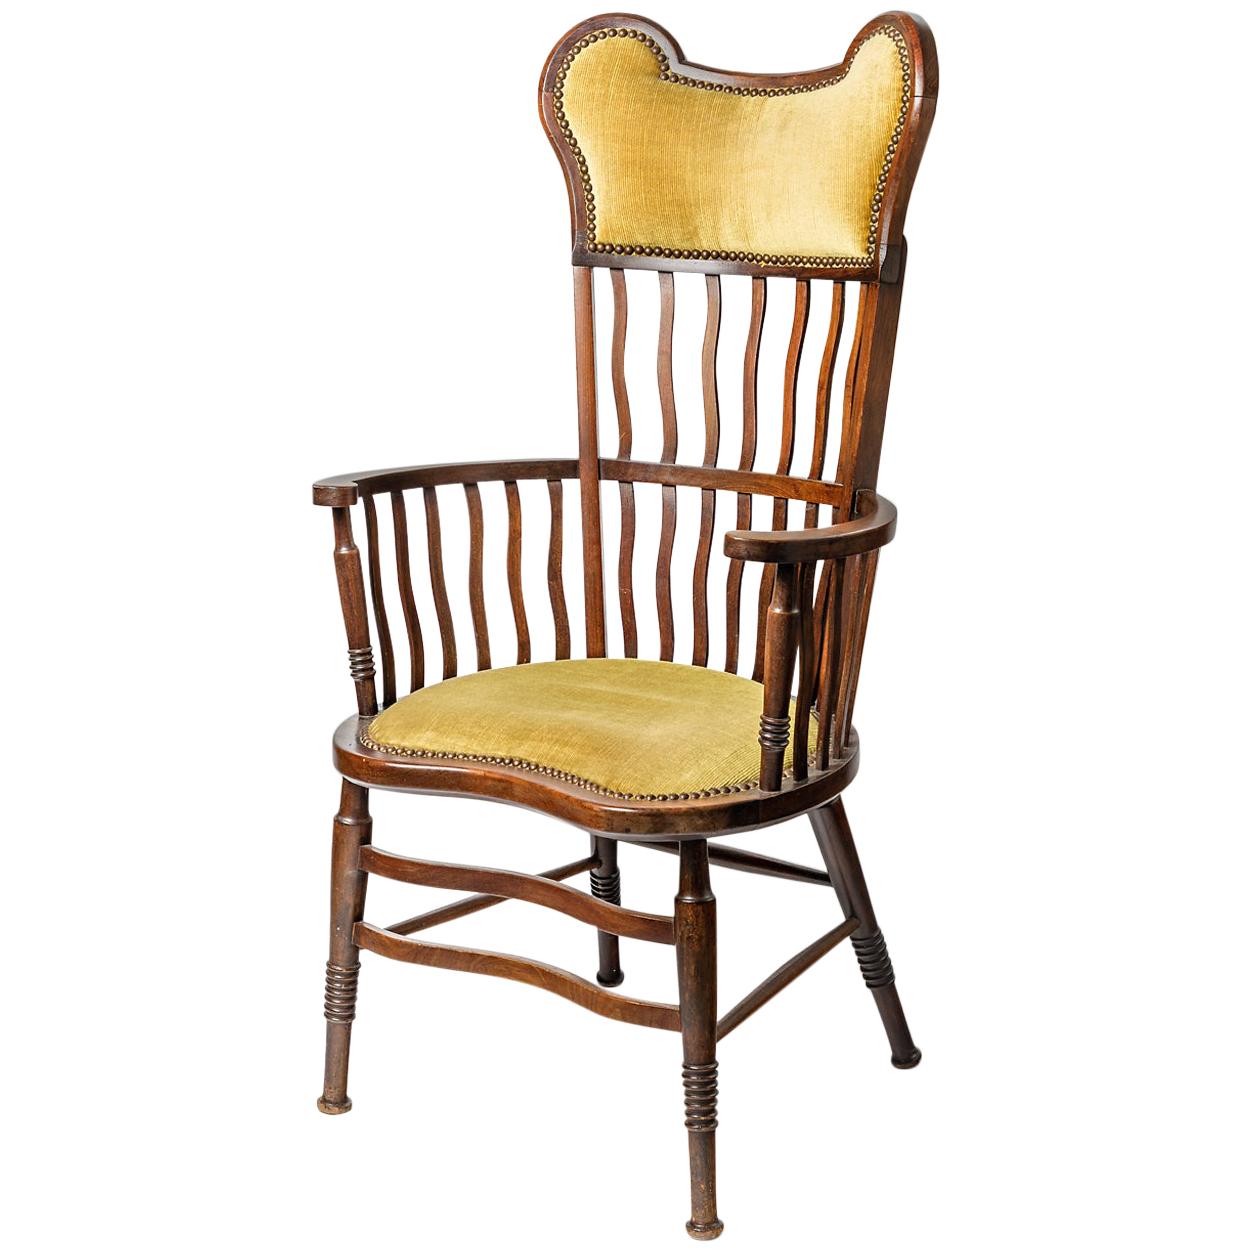 Elegant Arts & Crafts 1900 Armchair or Chair Mid-20th Century Design Thonet